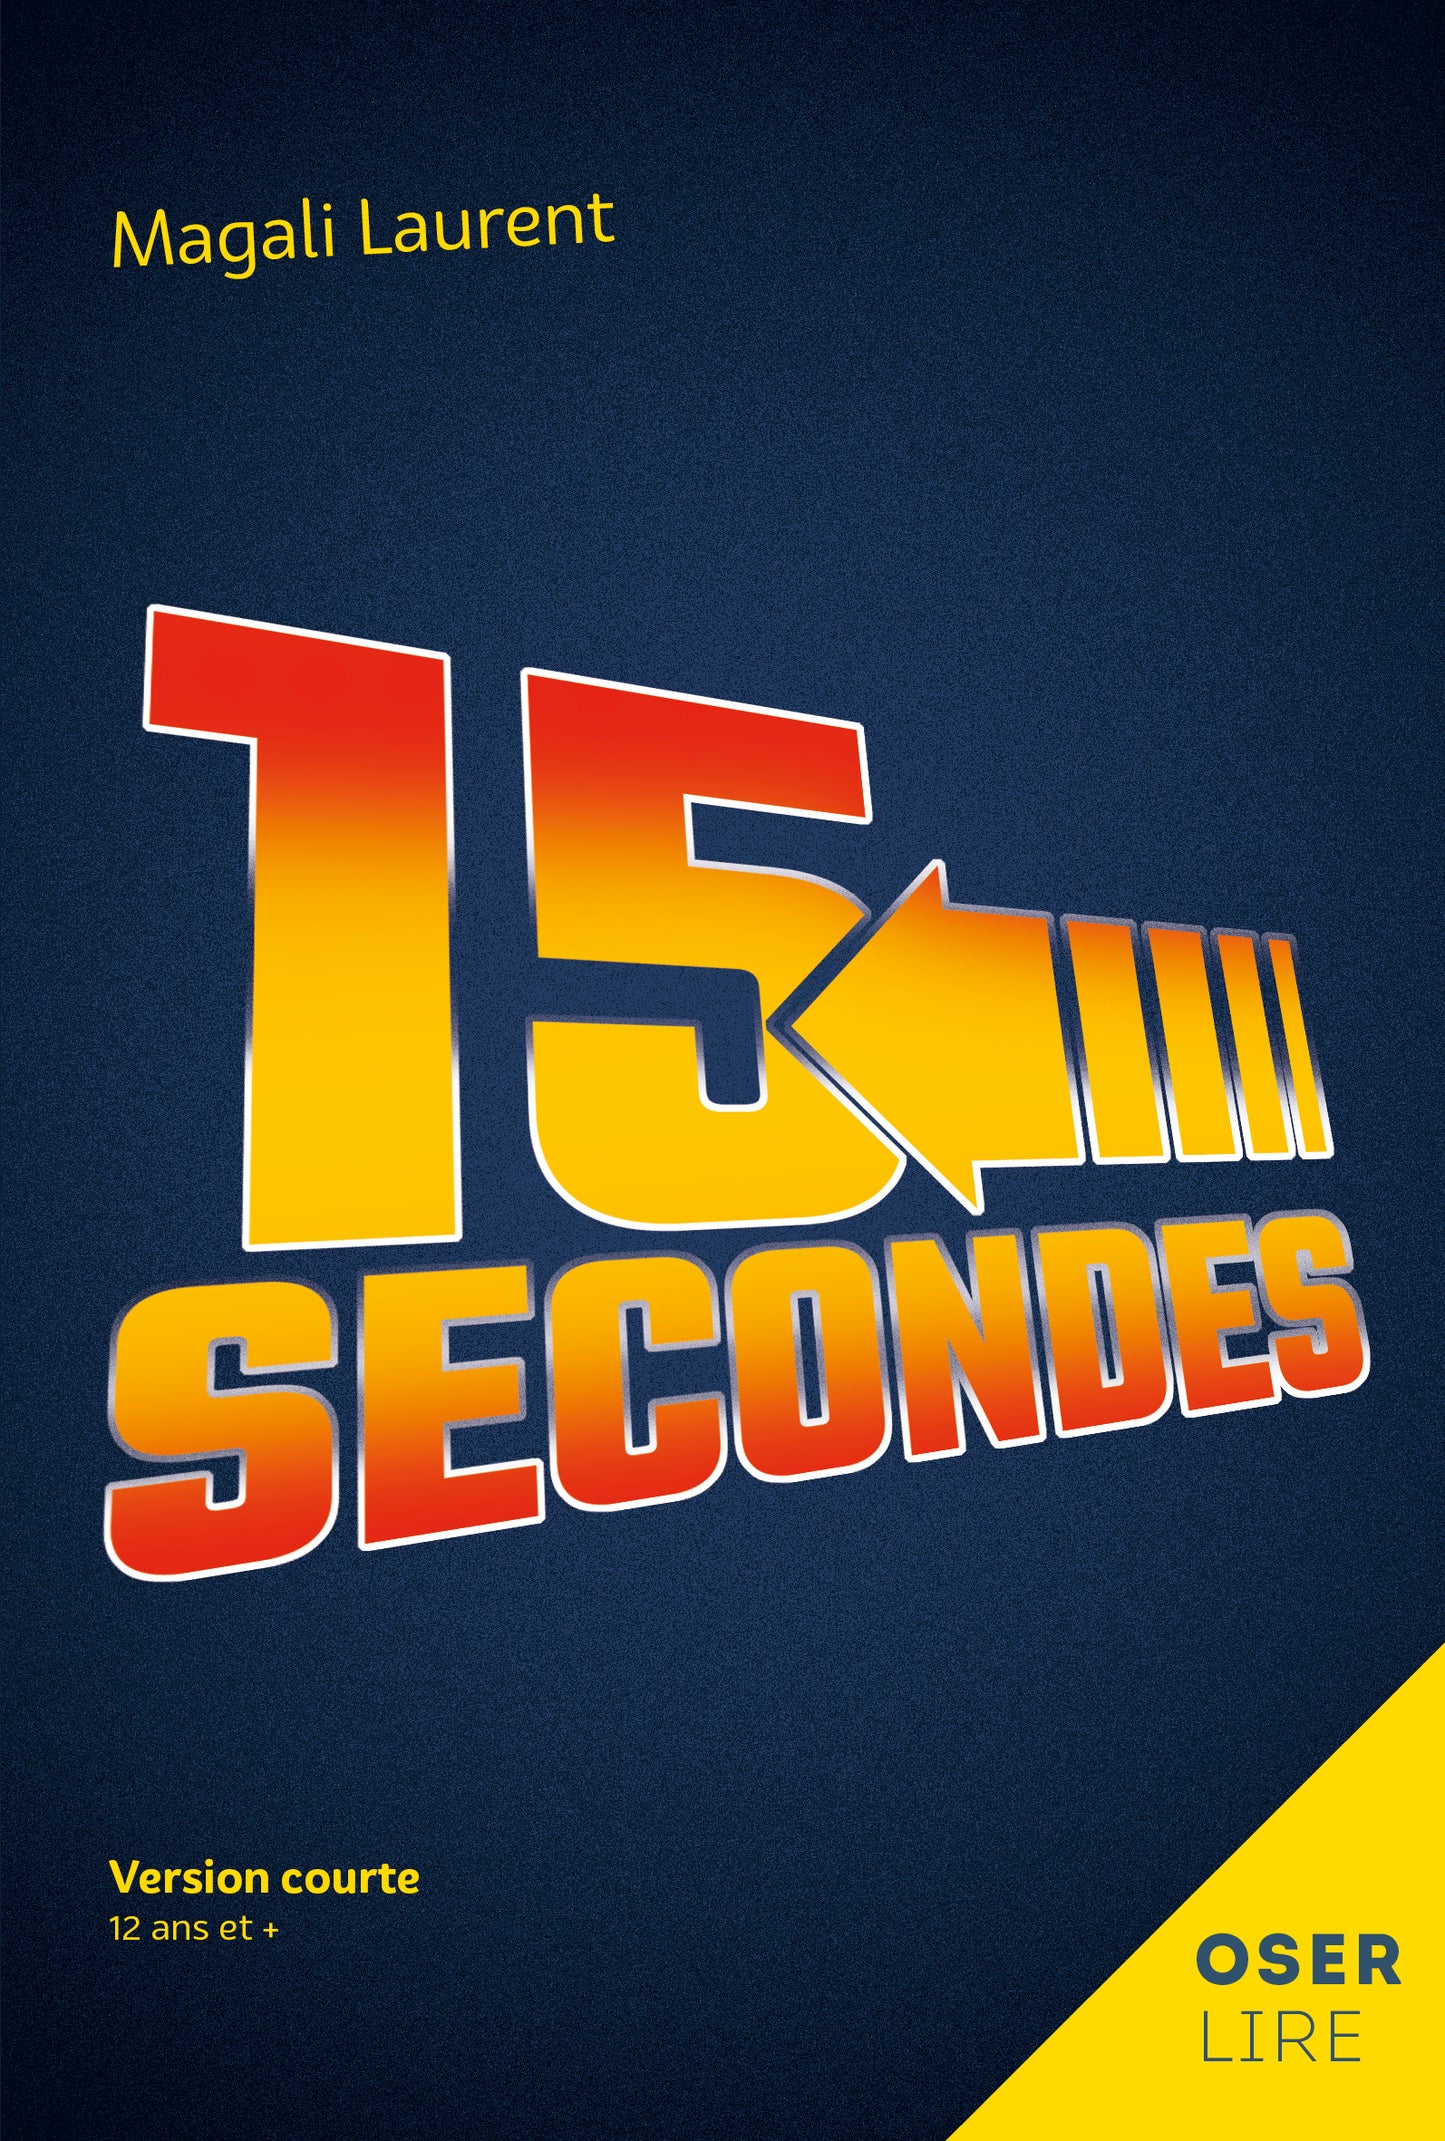 15 secondes